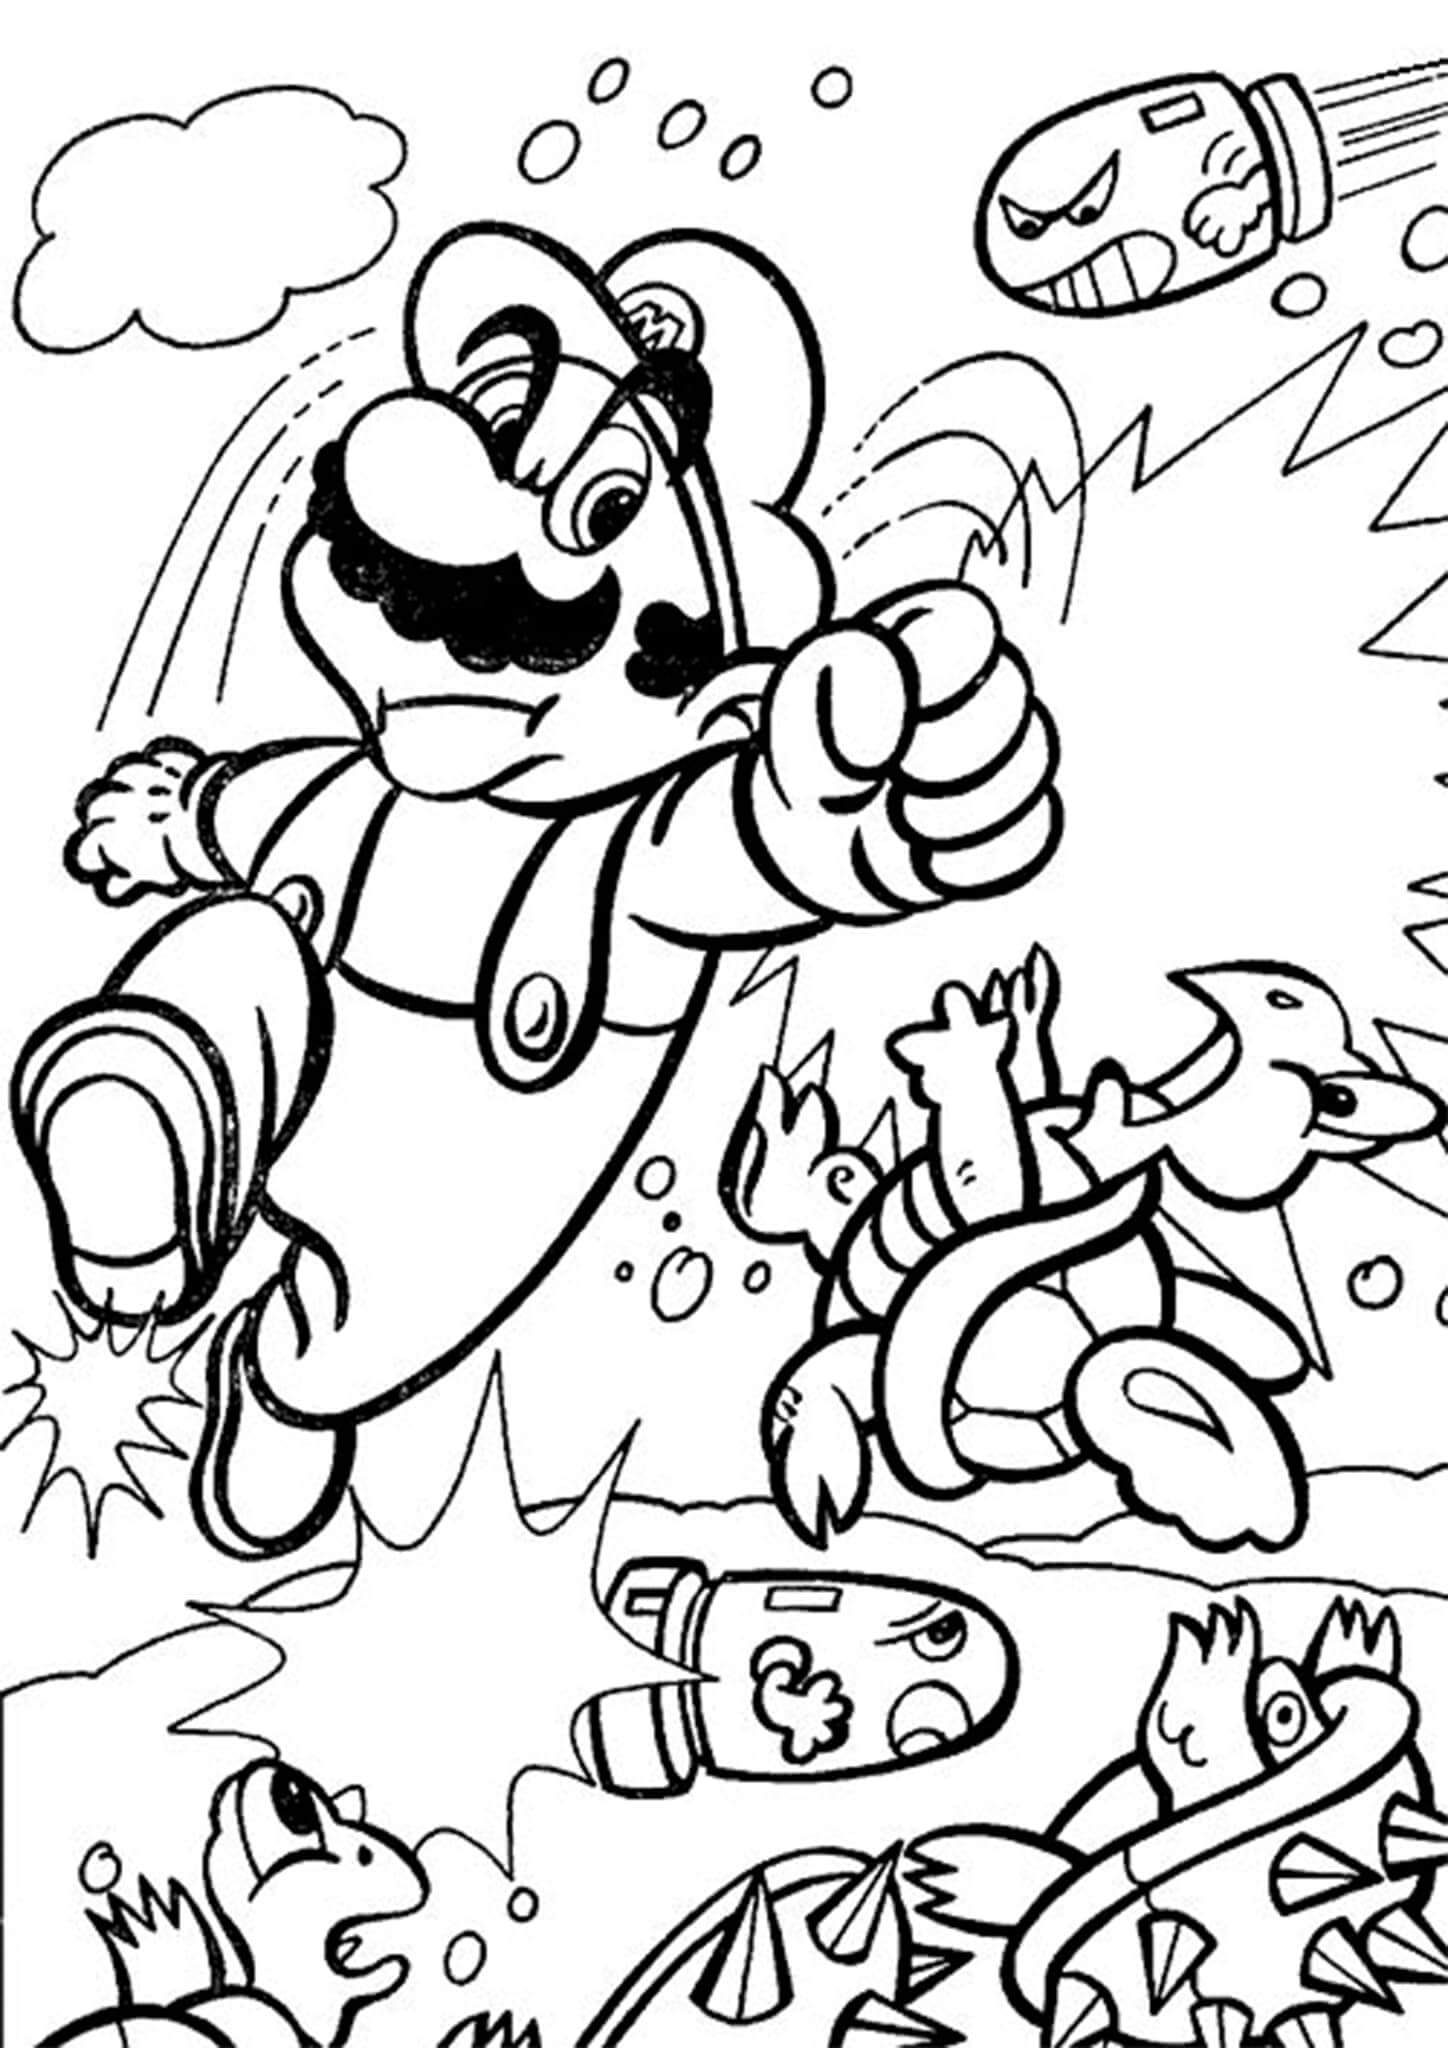 Génial Mario coloring page